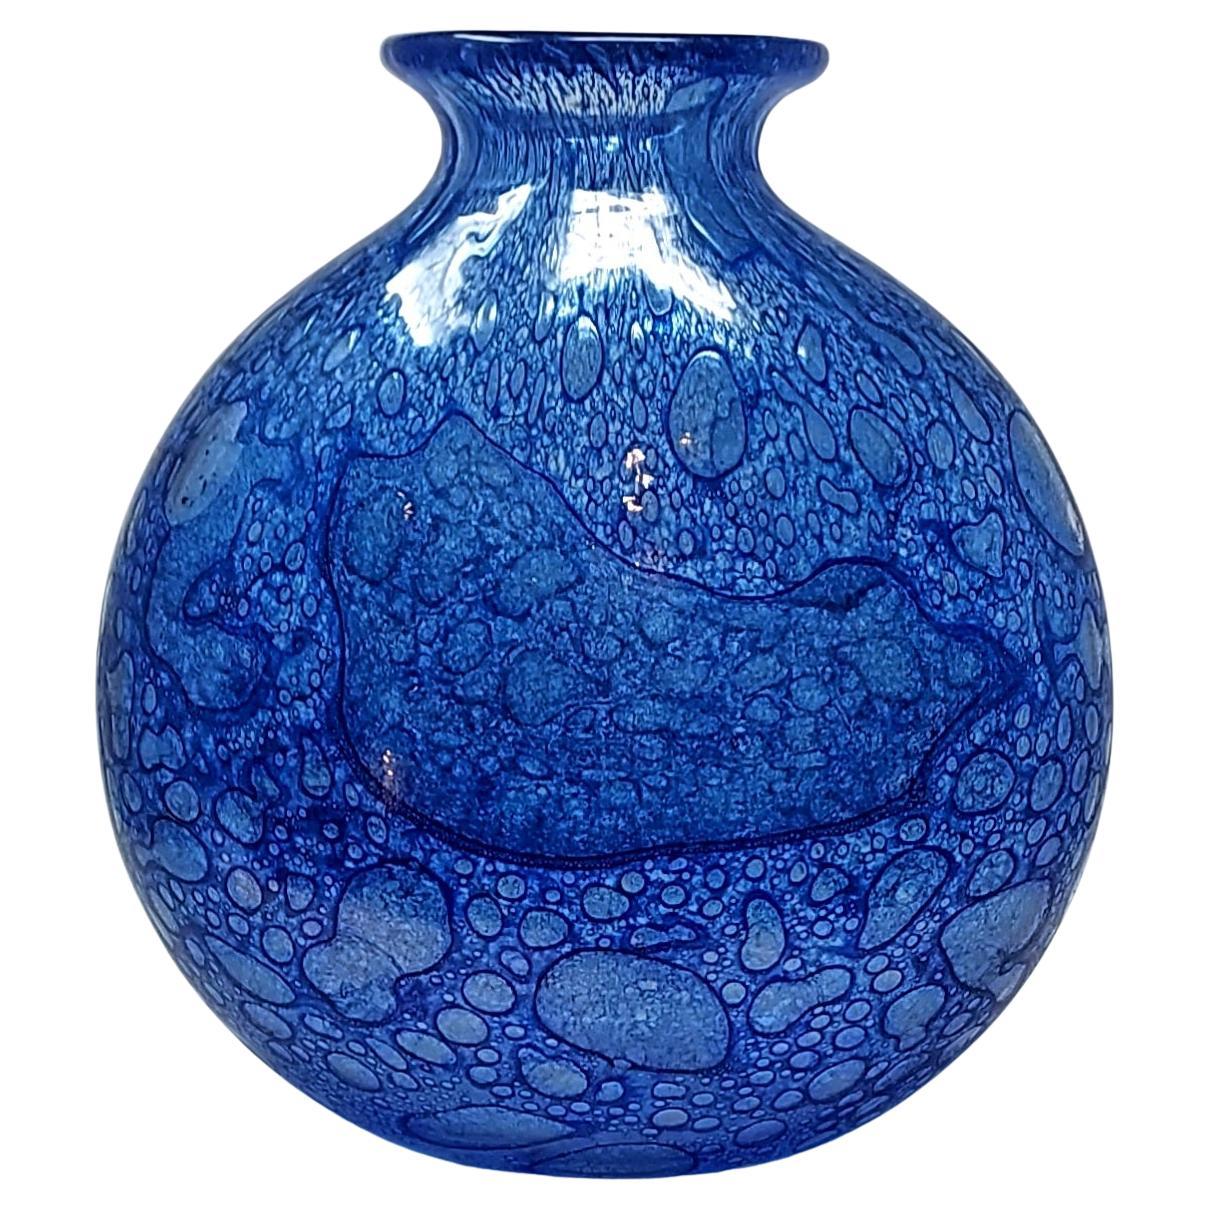 Ercole Barovier's "Efeso" Vase by Barovier & Toso